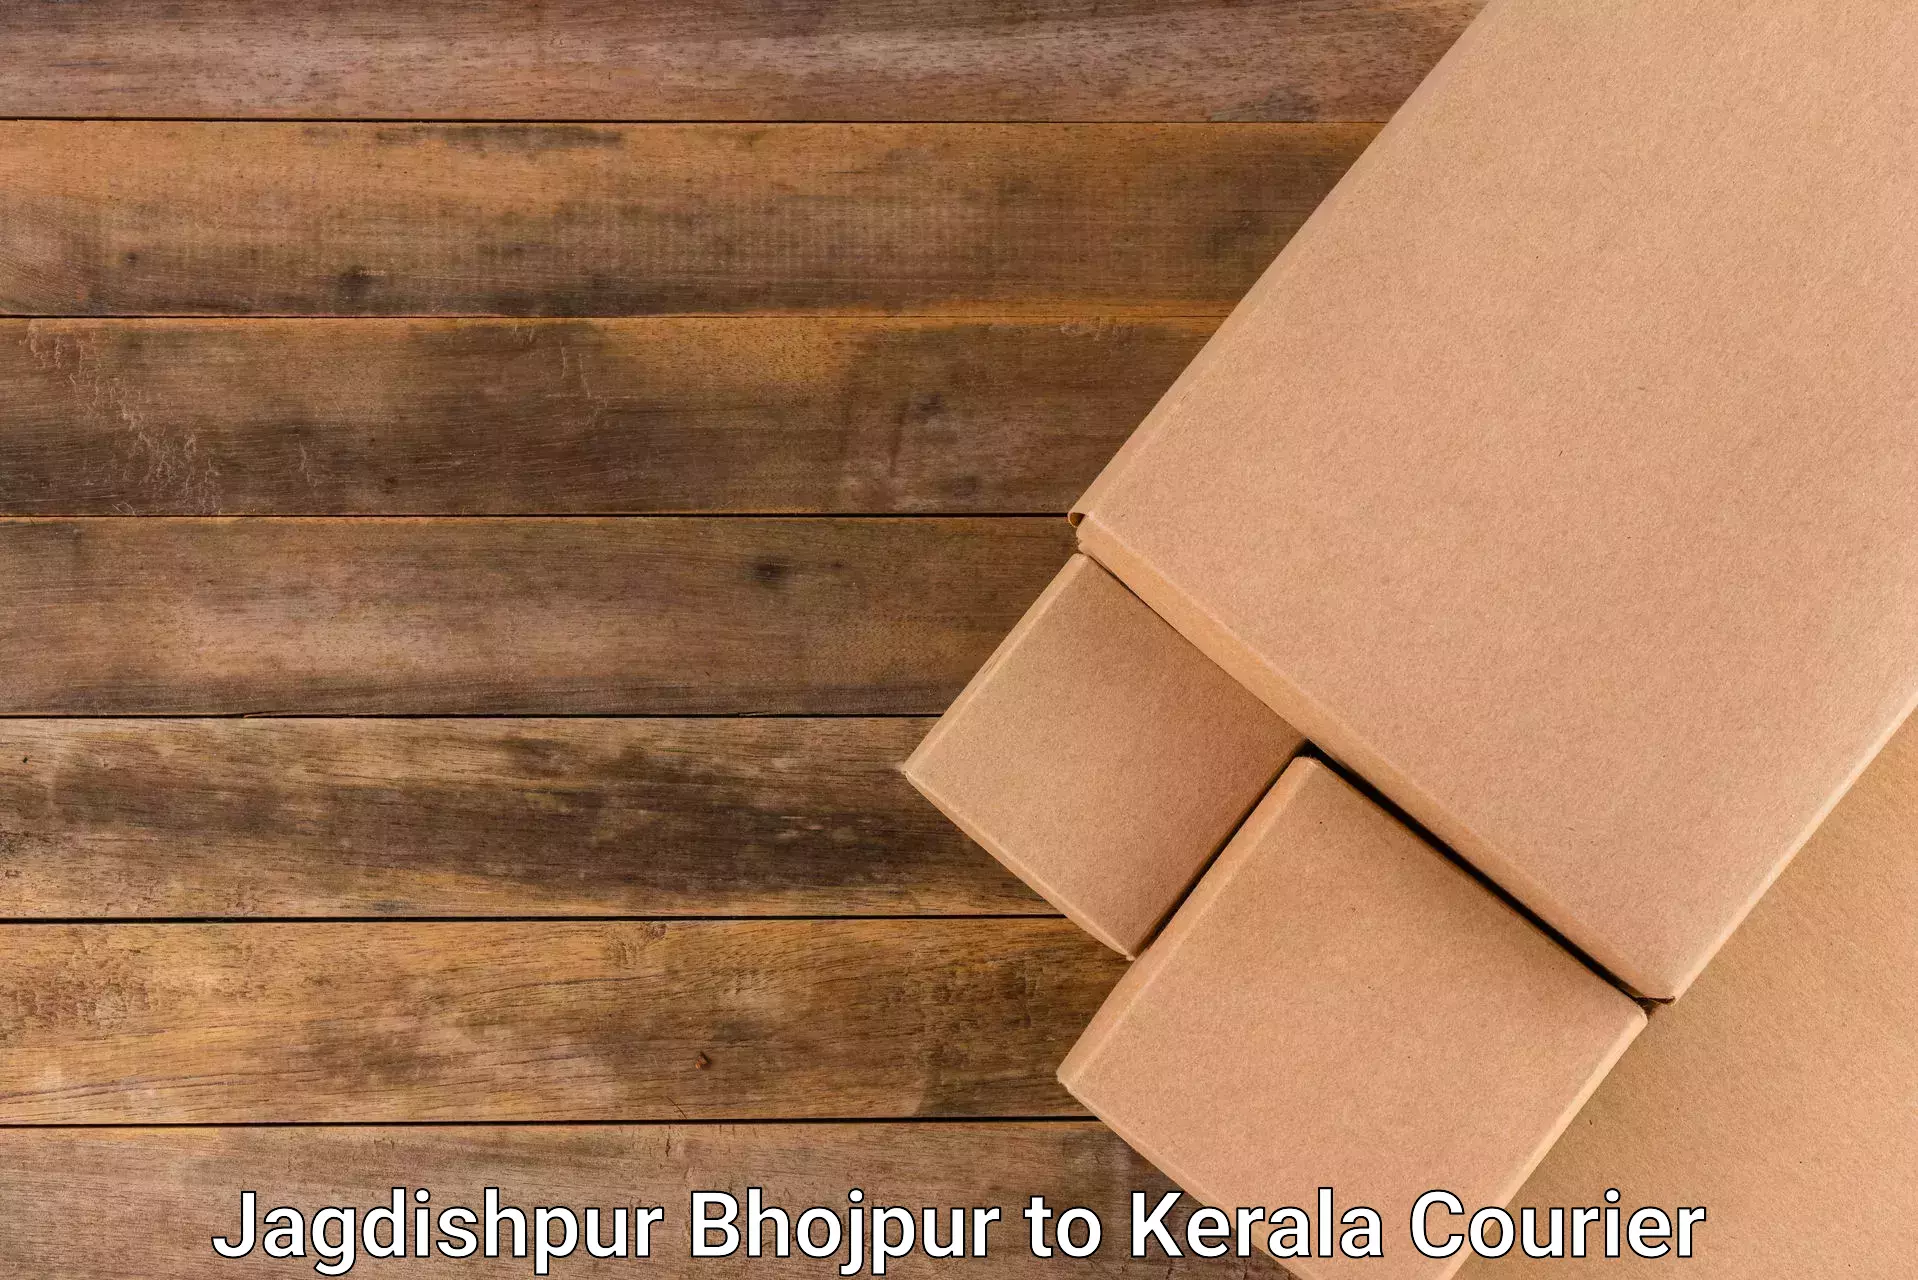 Smart shipping technology Jagdishpur Bhojpur to Cochin Port Kochi